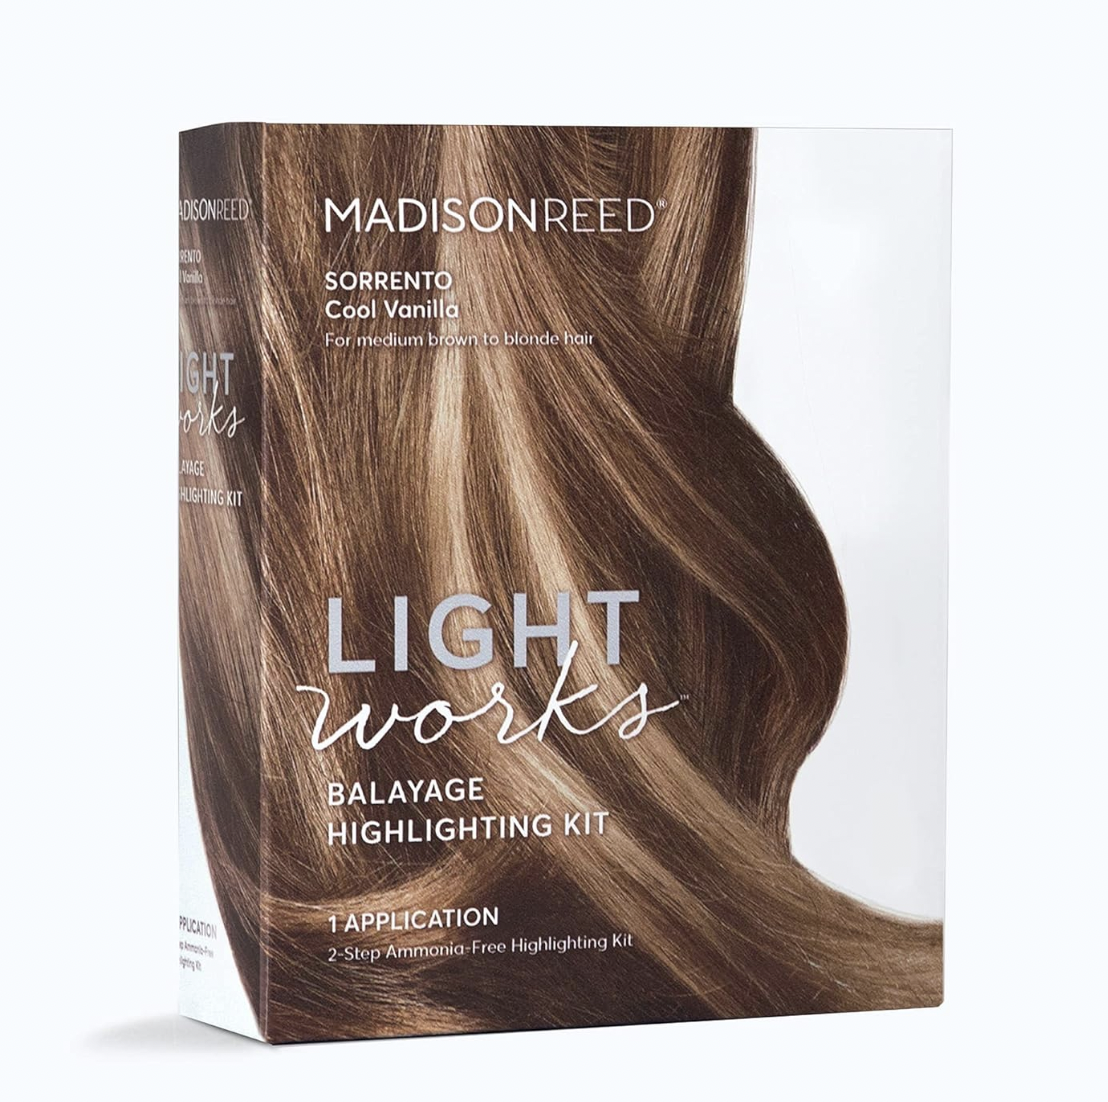 Madison Reed Light Works Balayage Highlighting Kit on Amazon